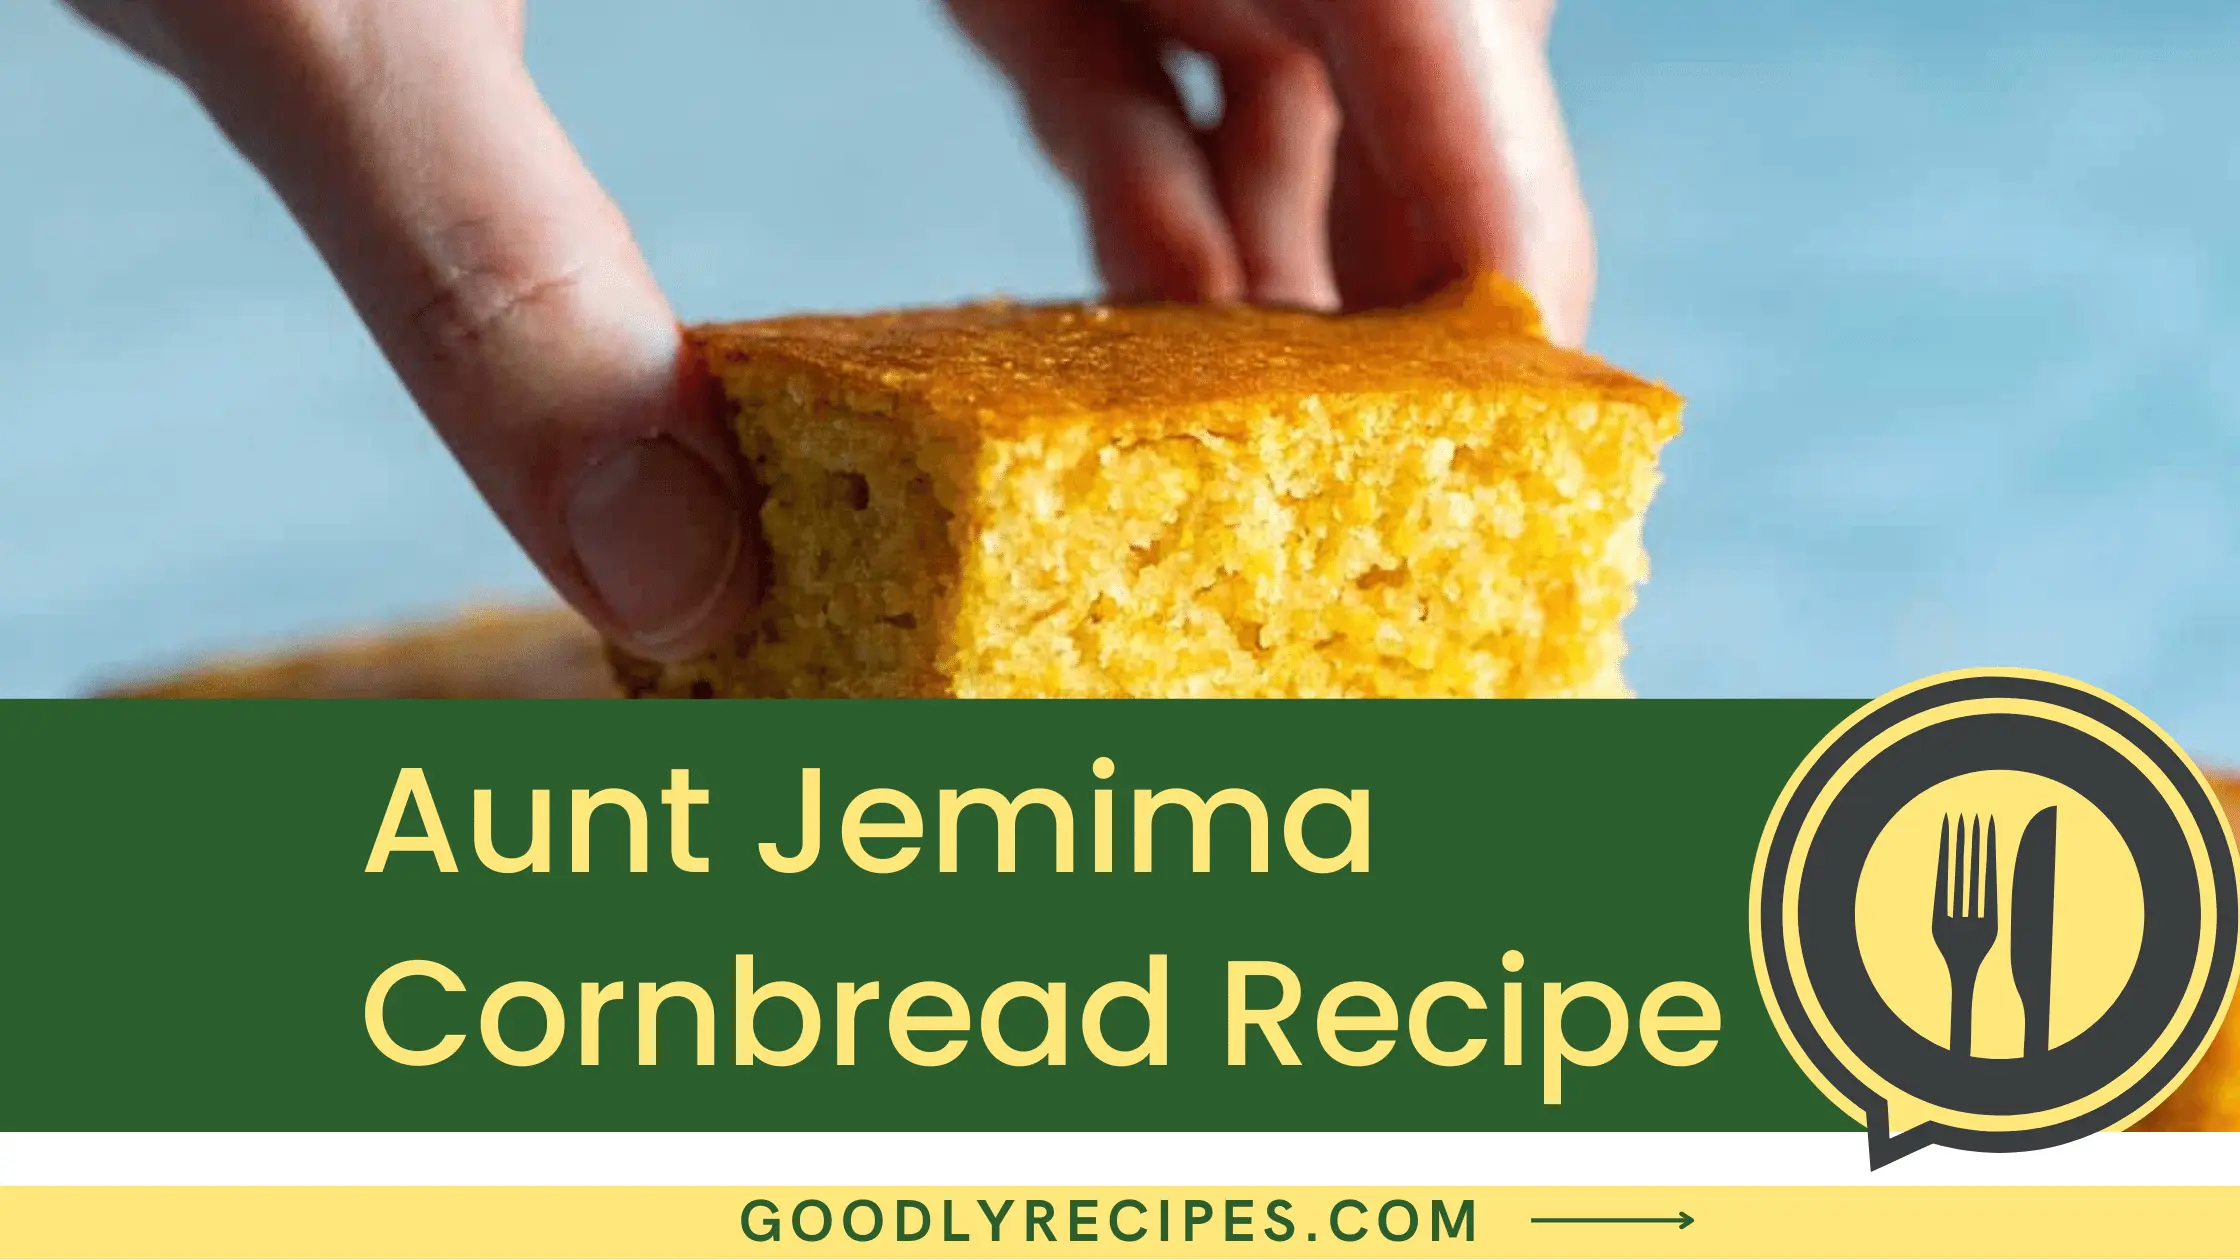 Aunt Jemima Cornbread Recipe - For Food Lovers